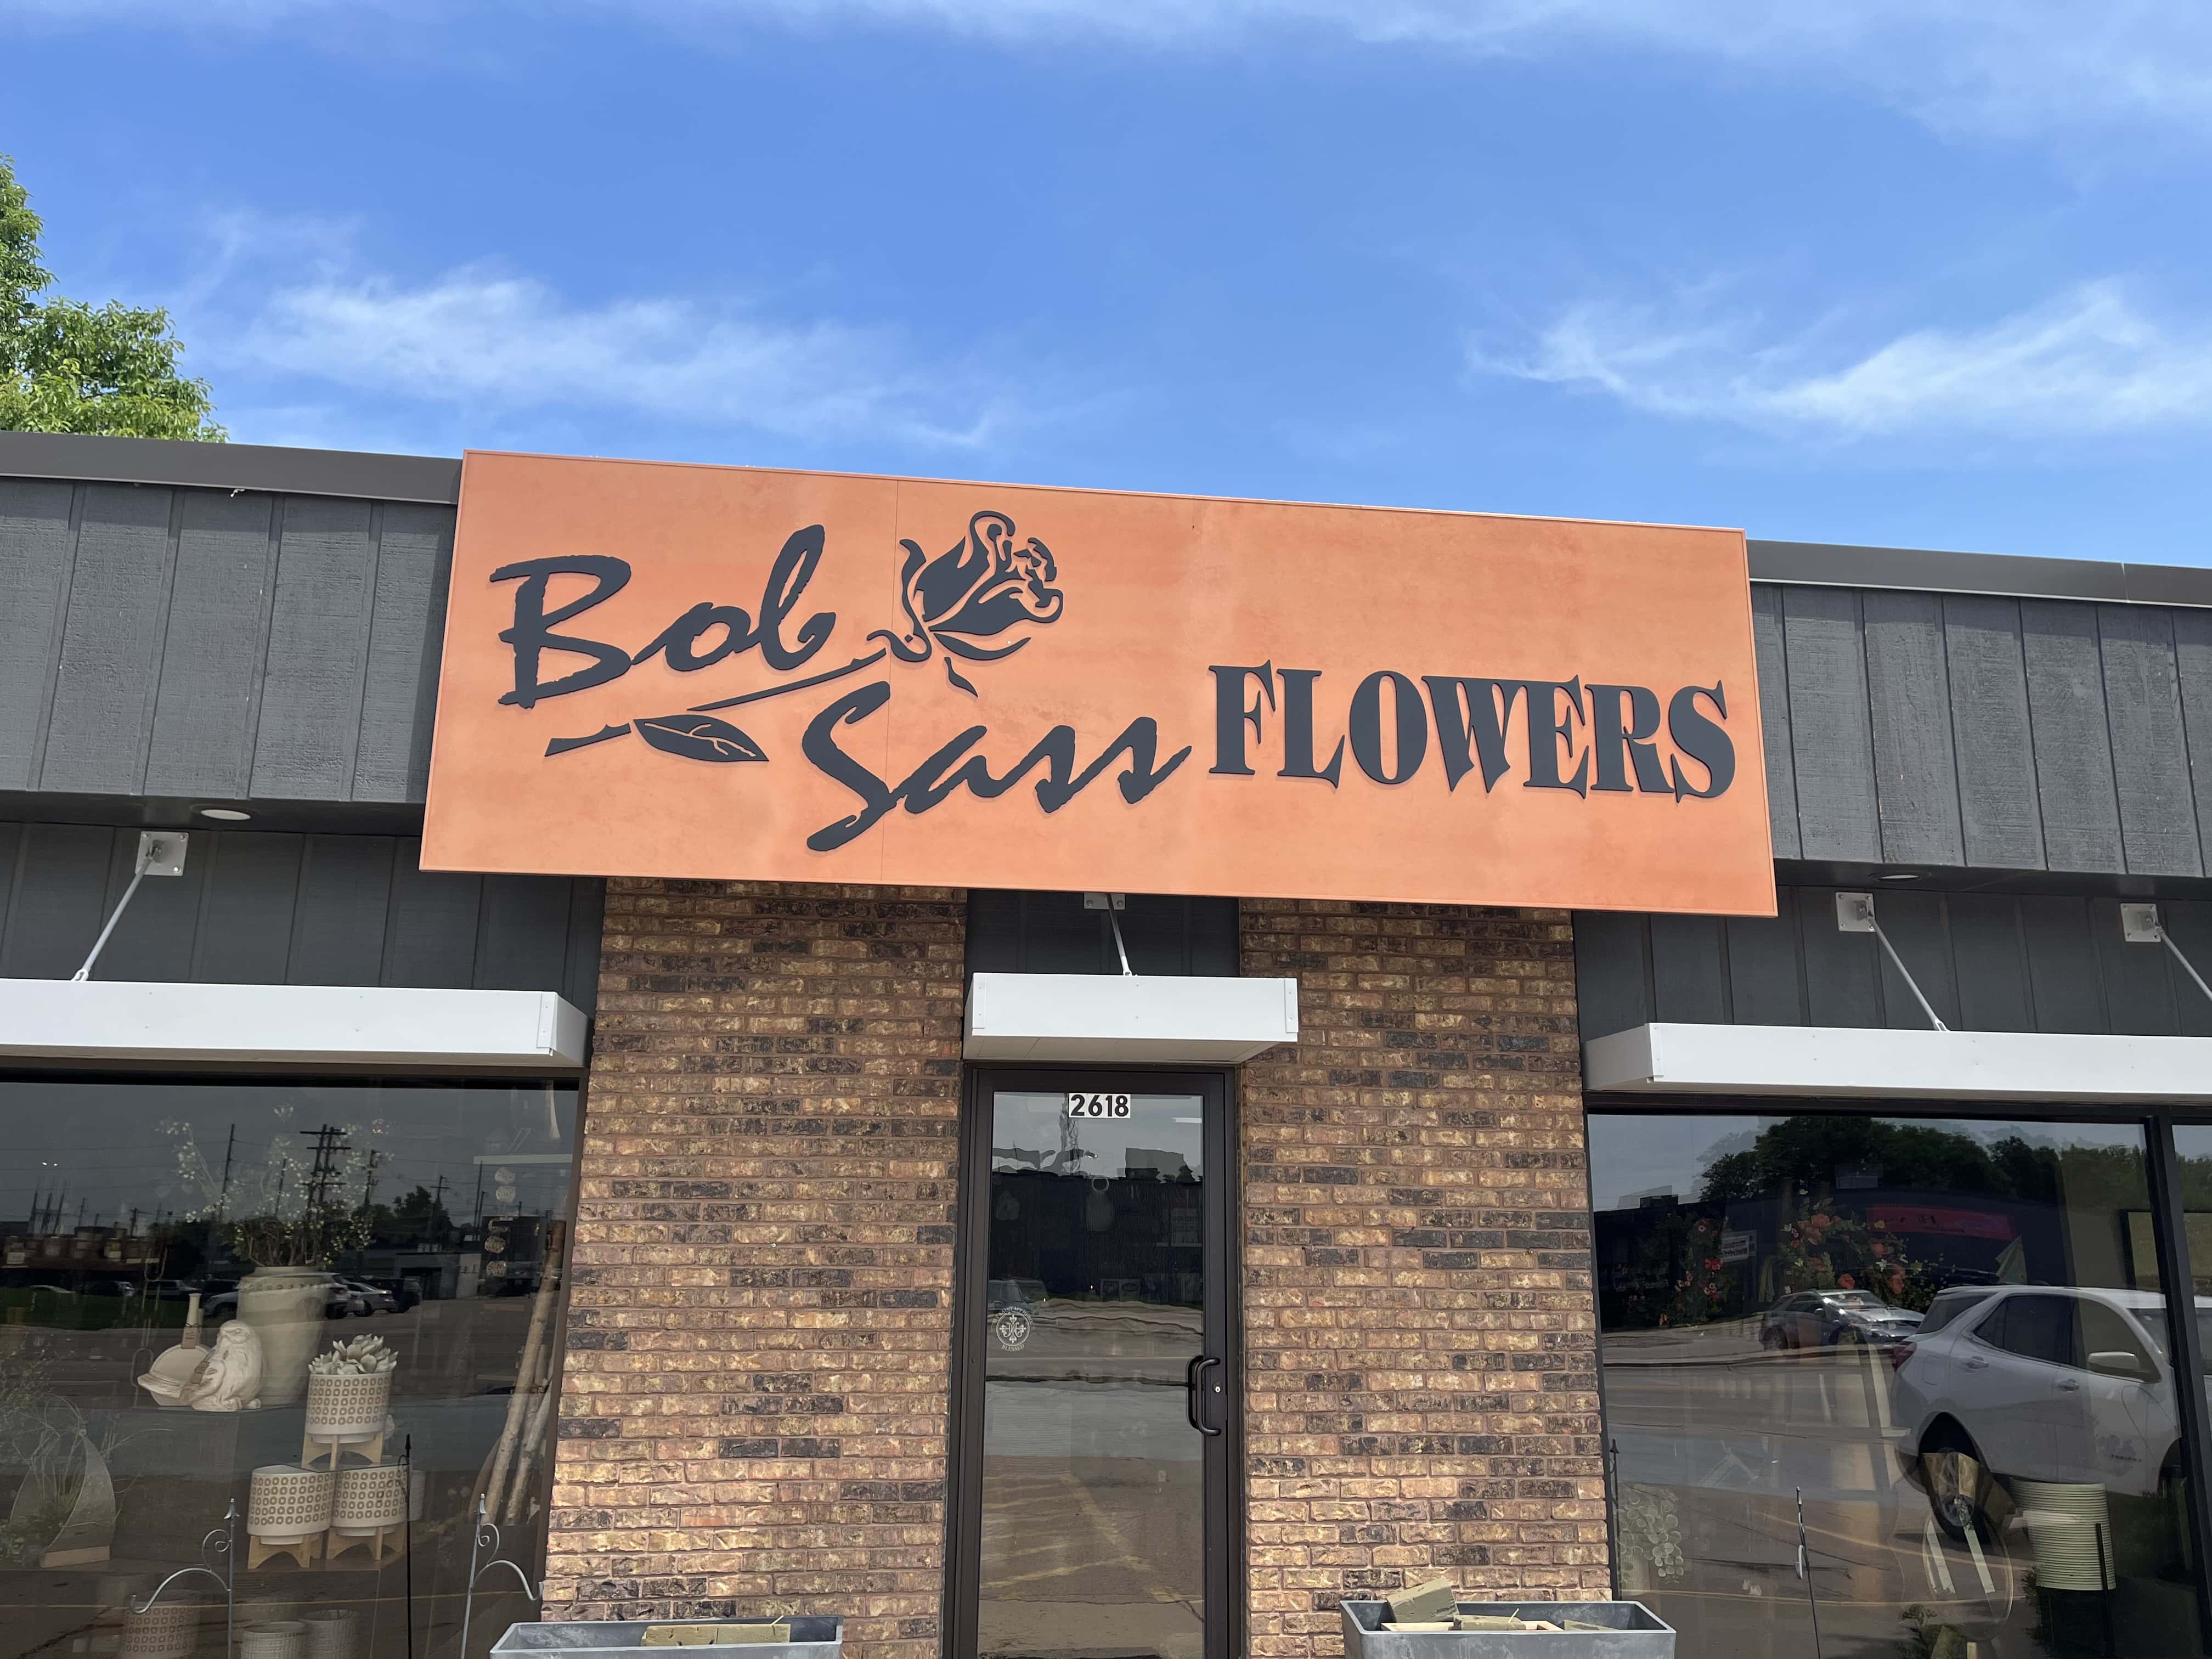 Bob Sass Flowers - Hastings, NE, US, blossom flower shop